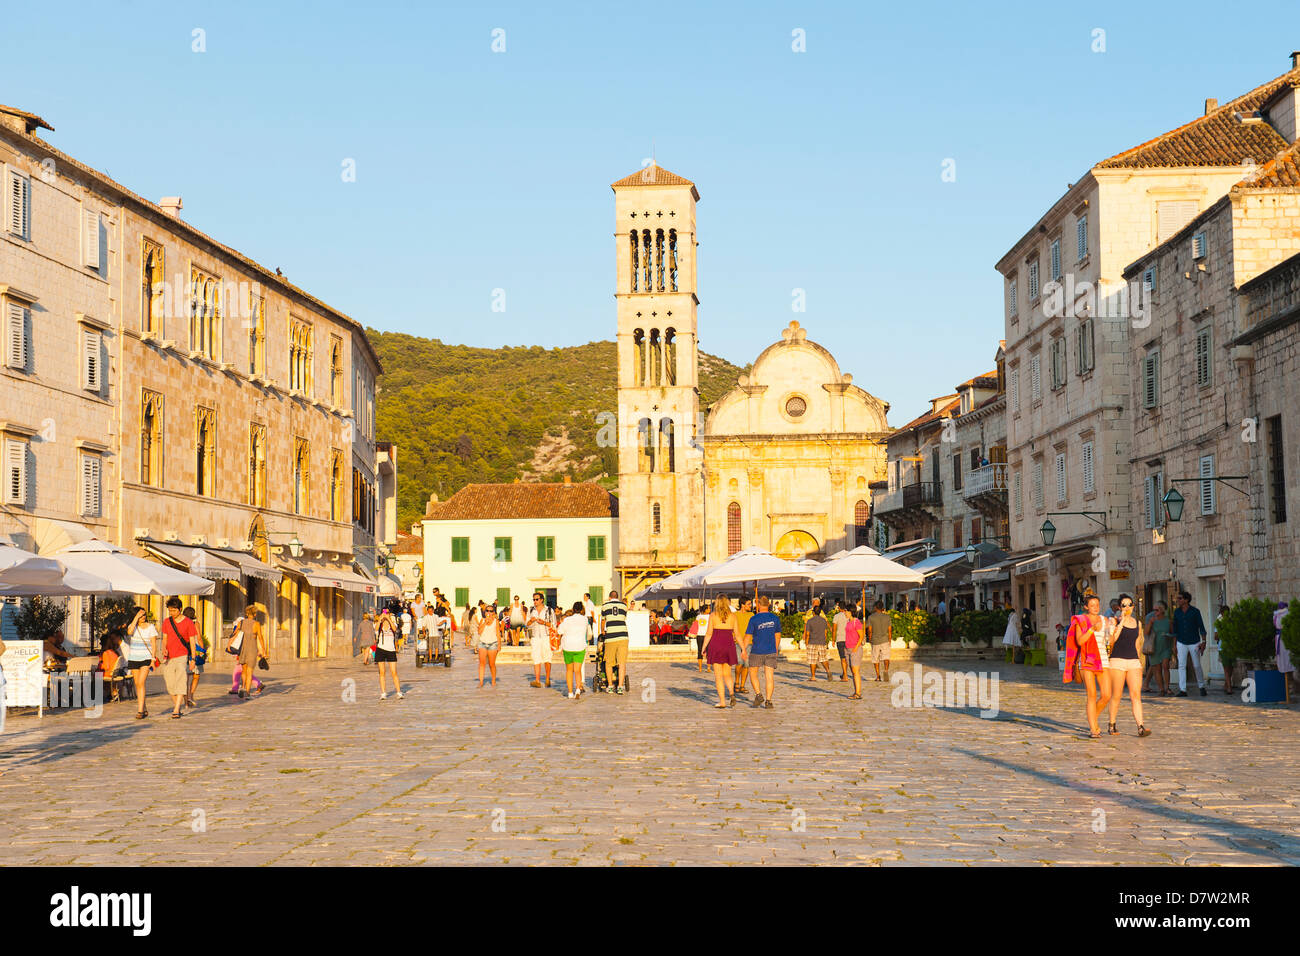 Tourists on holiday in St. Stephens Square, Hvar Town, Hvar Island, Dalmatian Coast, Croatia Stock Photo